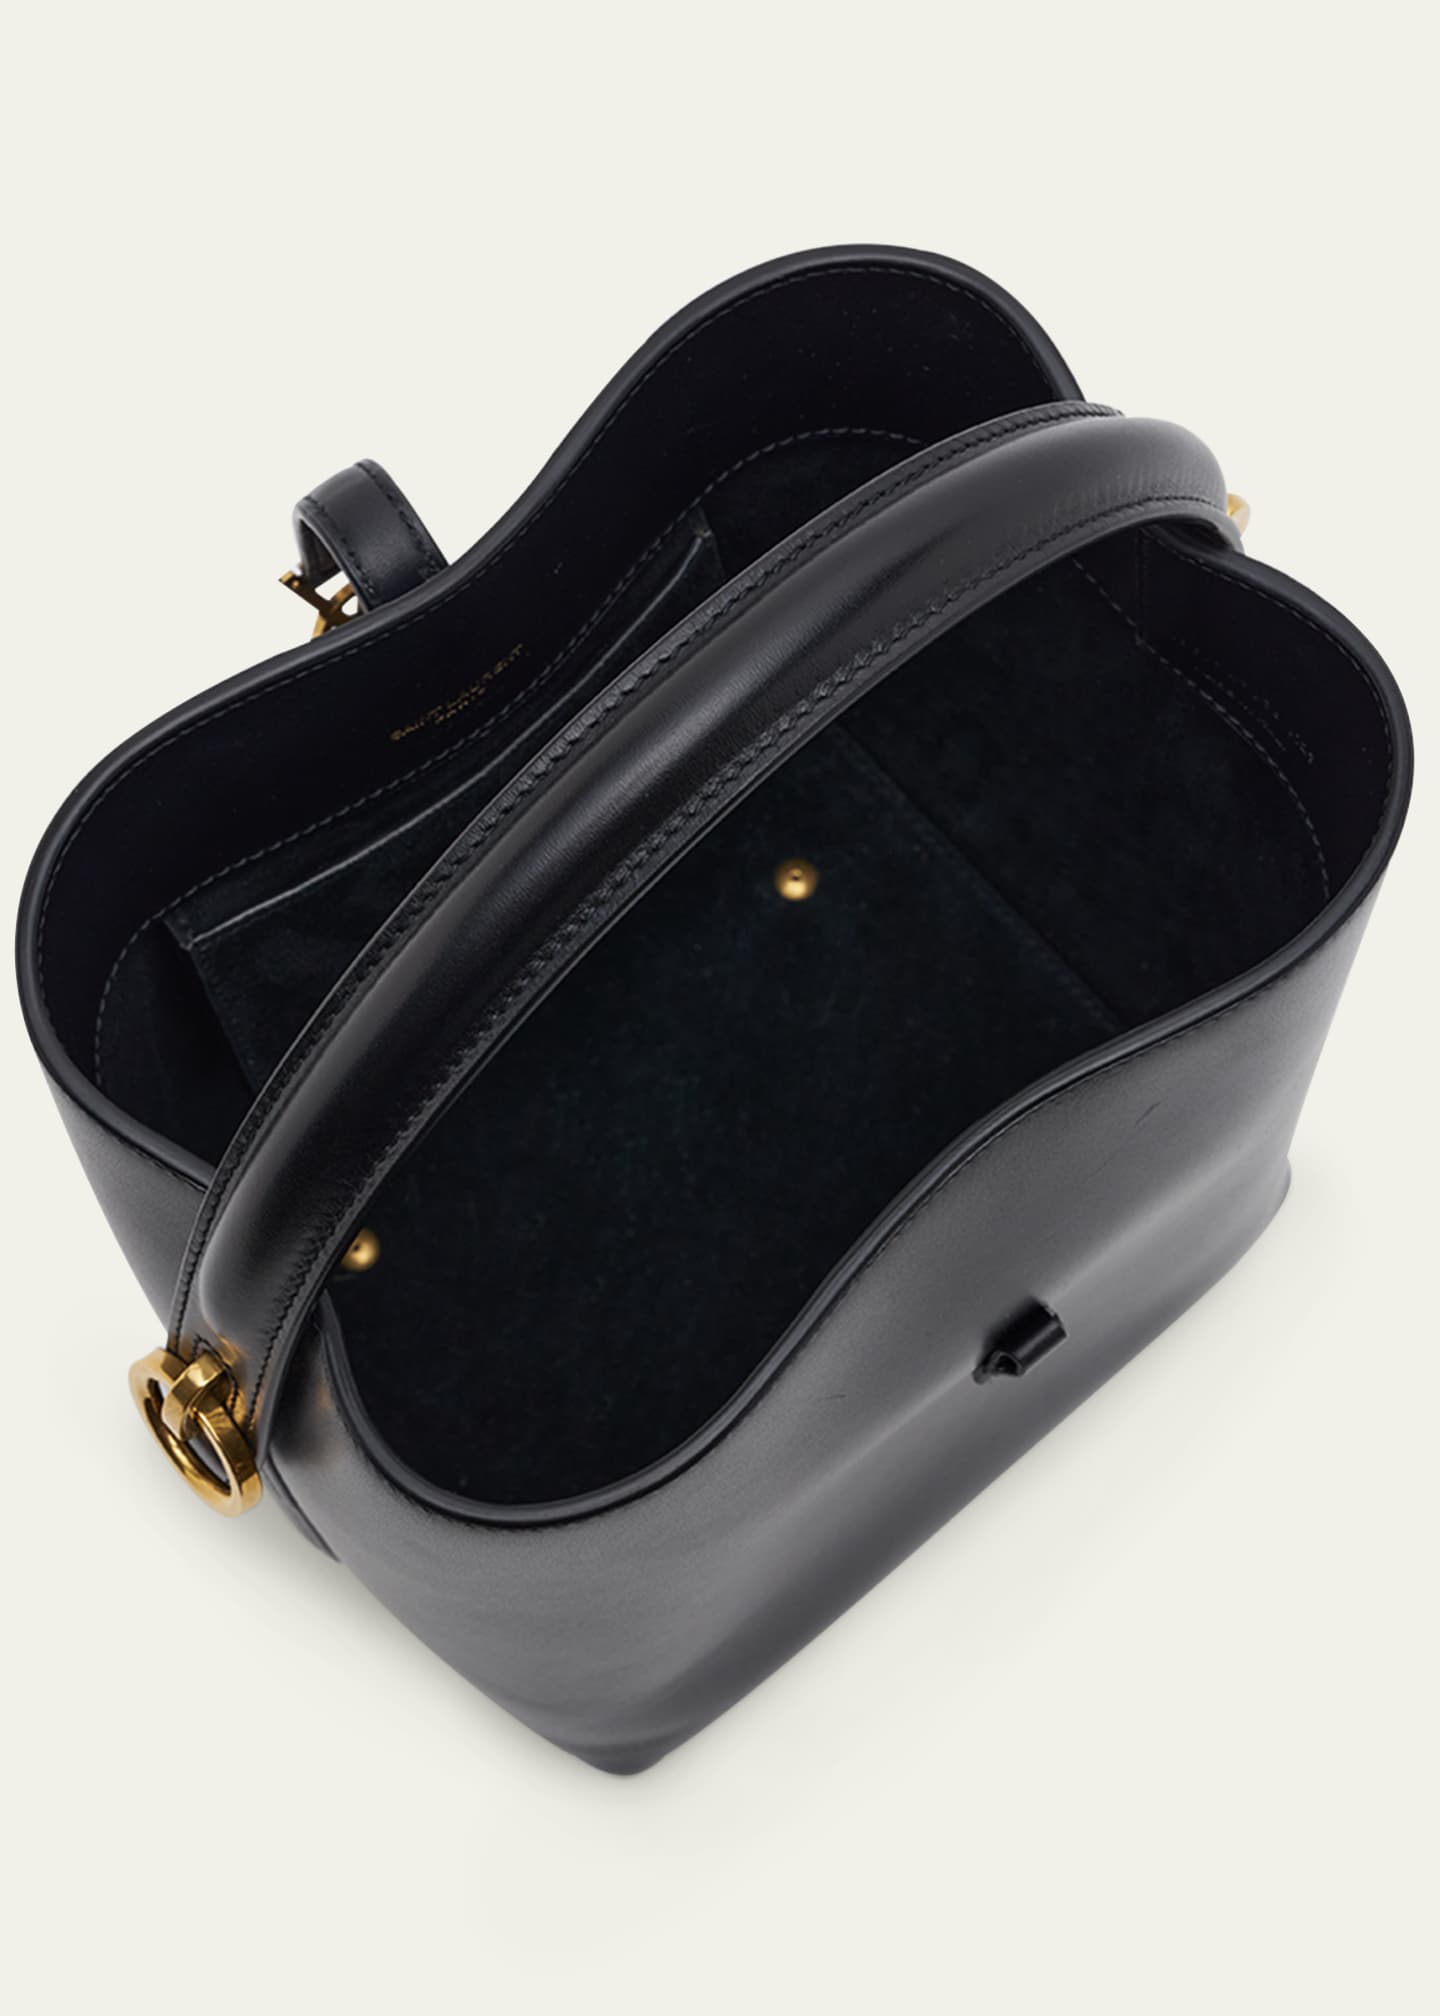 Le 37 Mini Leather Bucket Bag in Black - Saint Laurent